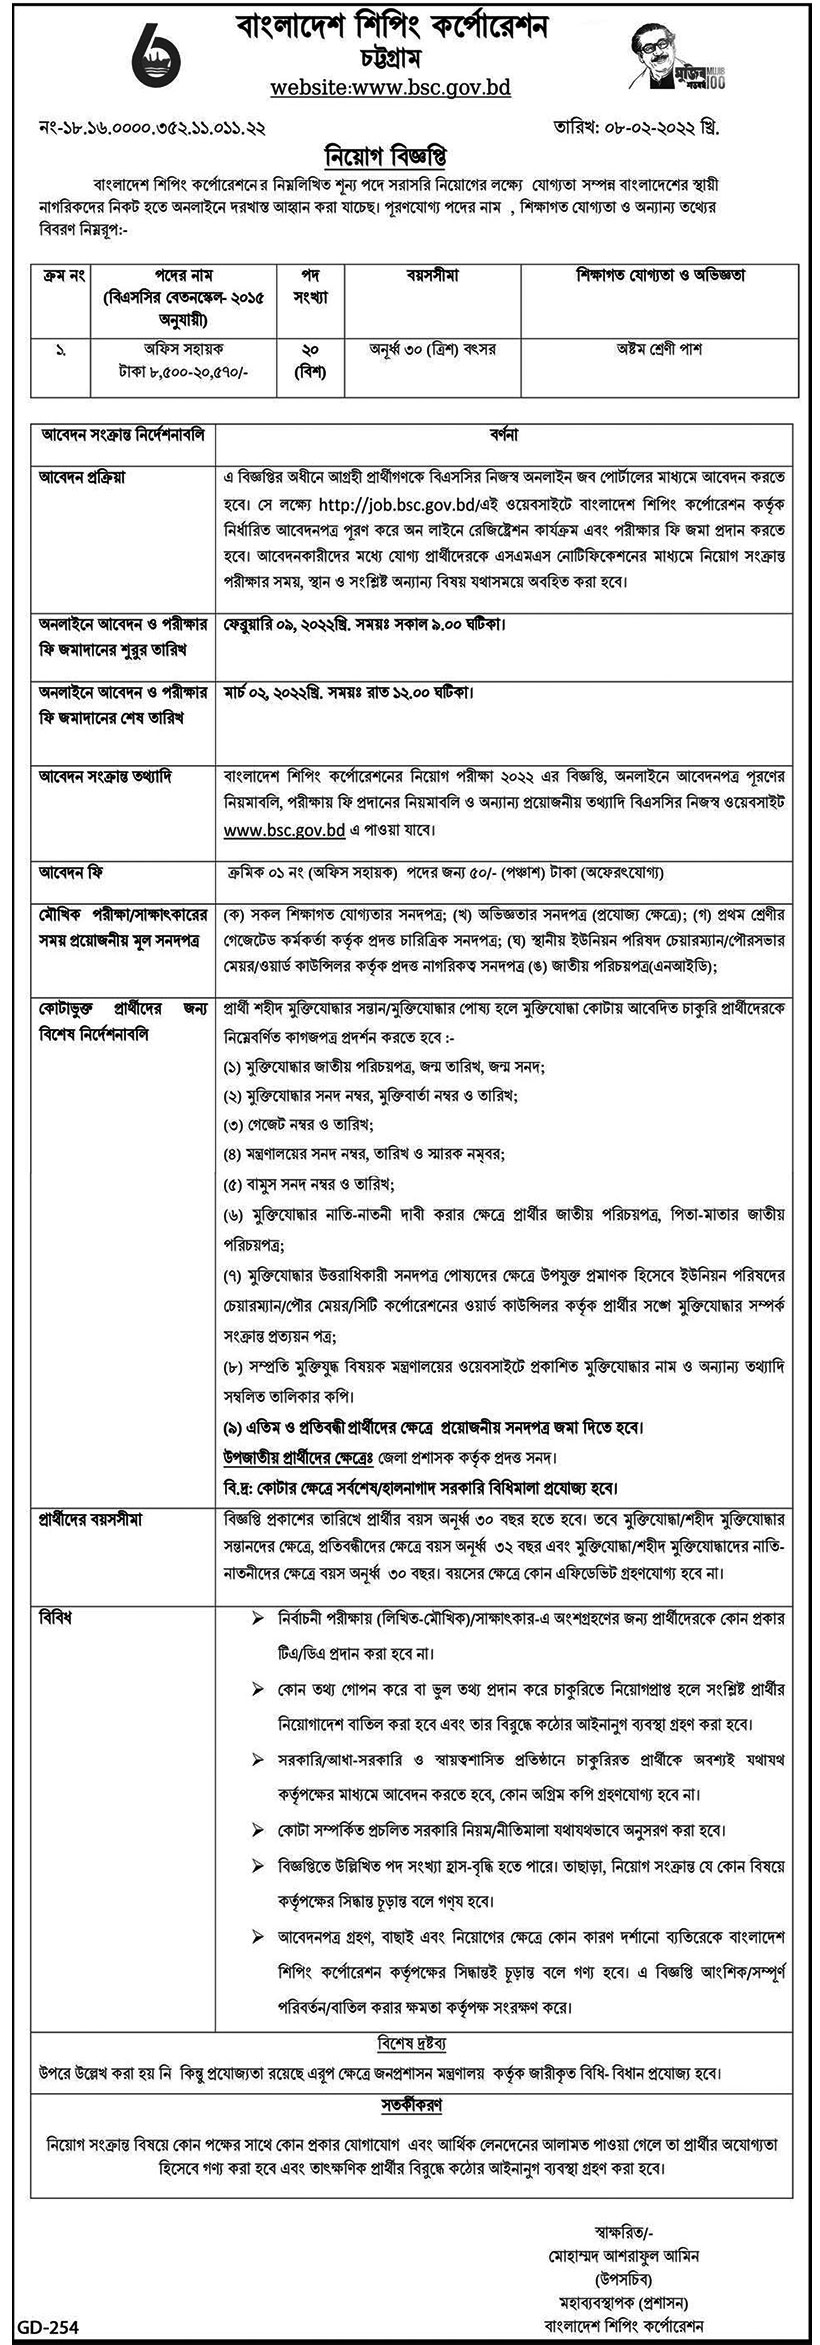 Bangladesh Shipping Corporation Job Circular (Image)